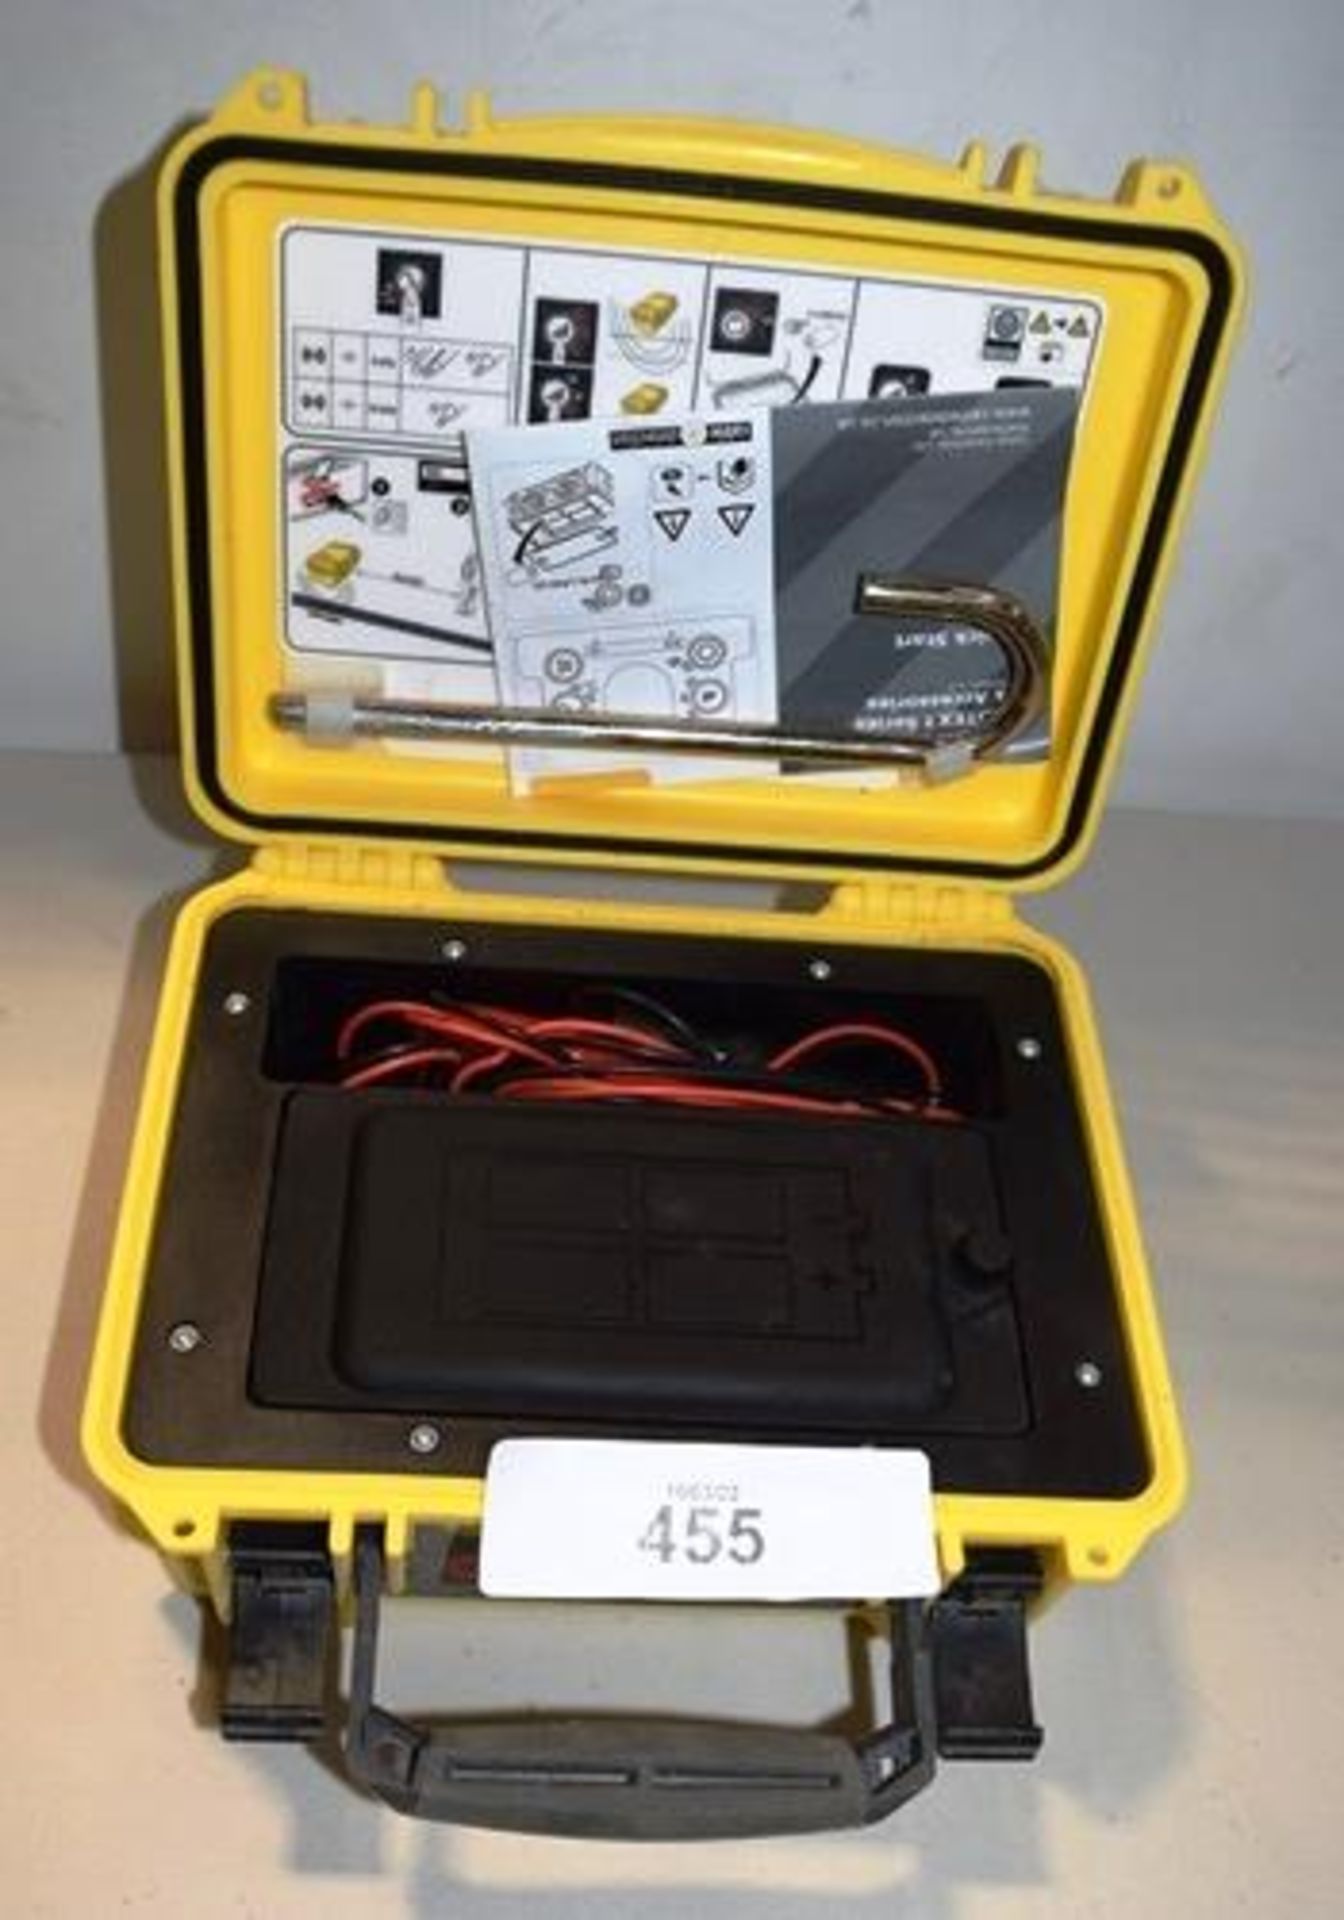 1 x Ezicat i550 cable avoidance tool, 1 x Ezicat T100 signal transmitter with yellow canvas case, - Image 5 of 6